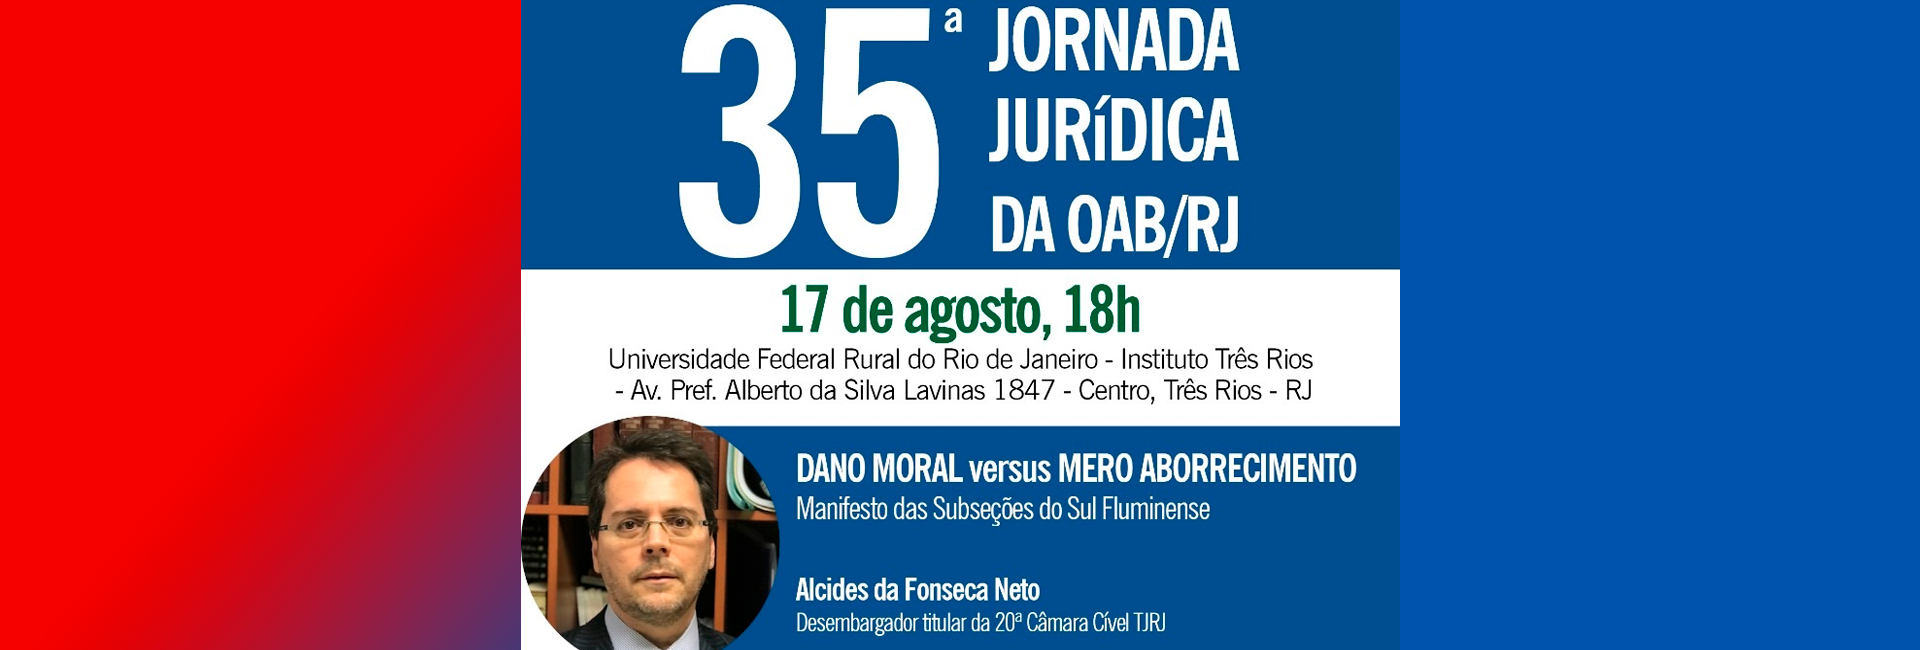 35ª Jornada Jurídica da OAB/RJ